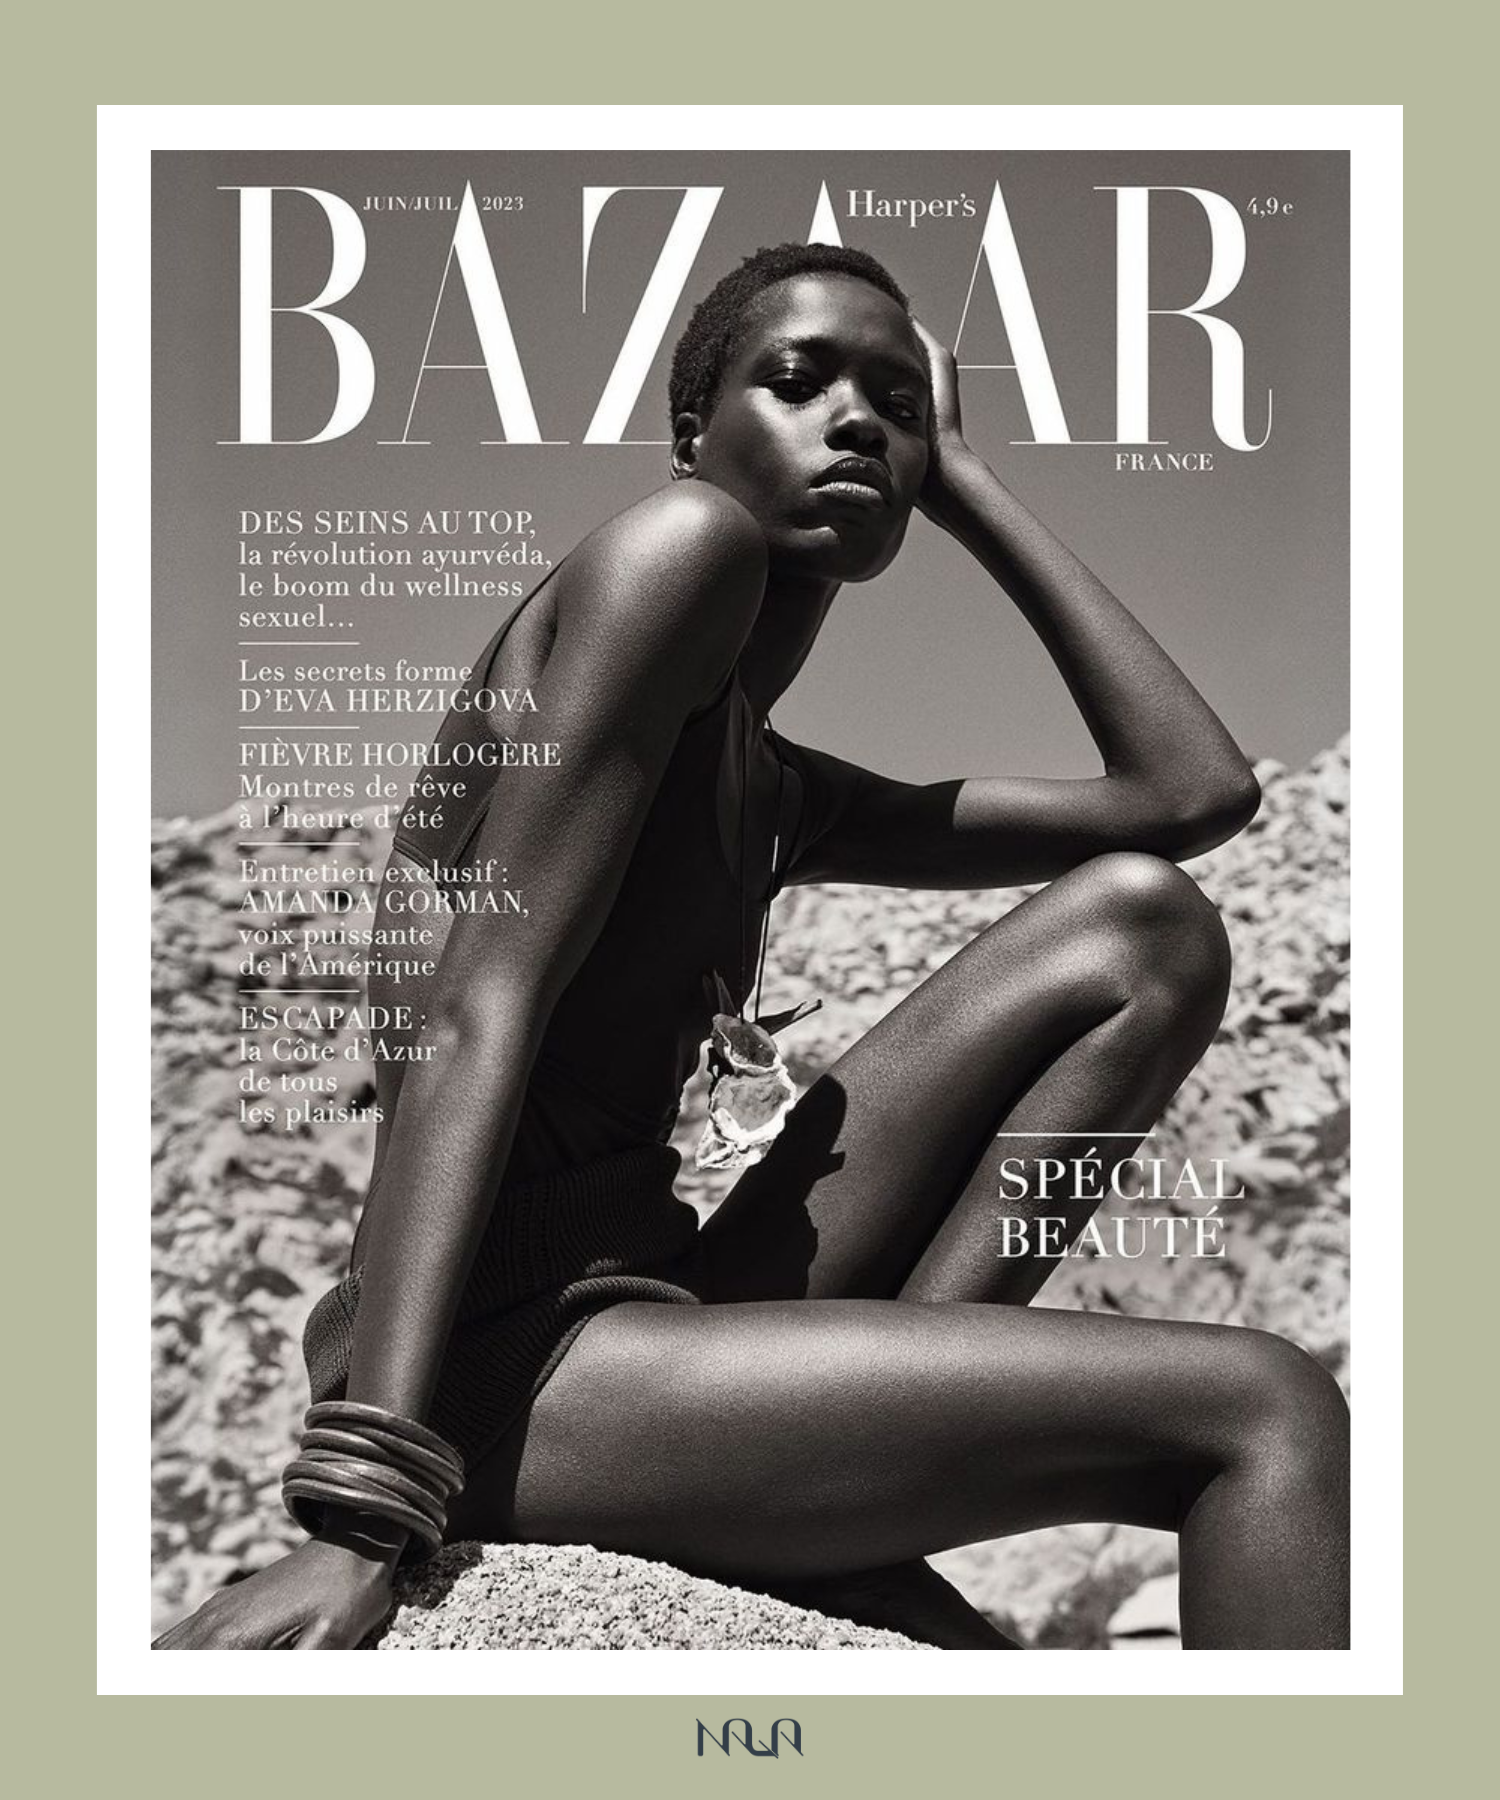 Harper's Bazaar France: Sacro-seins